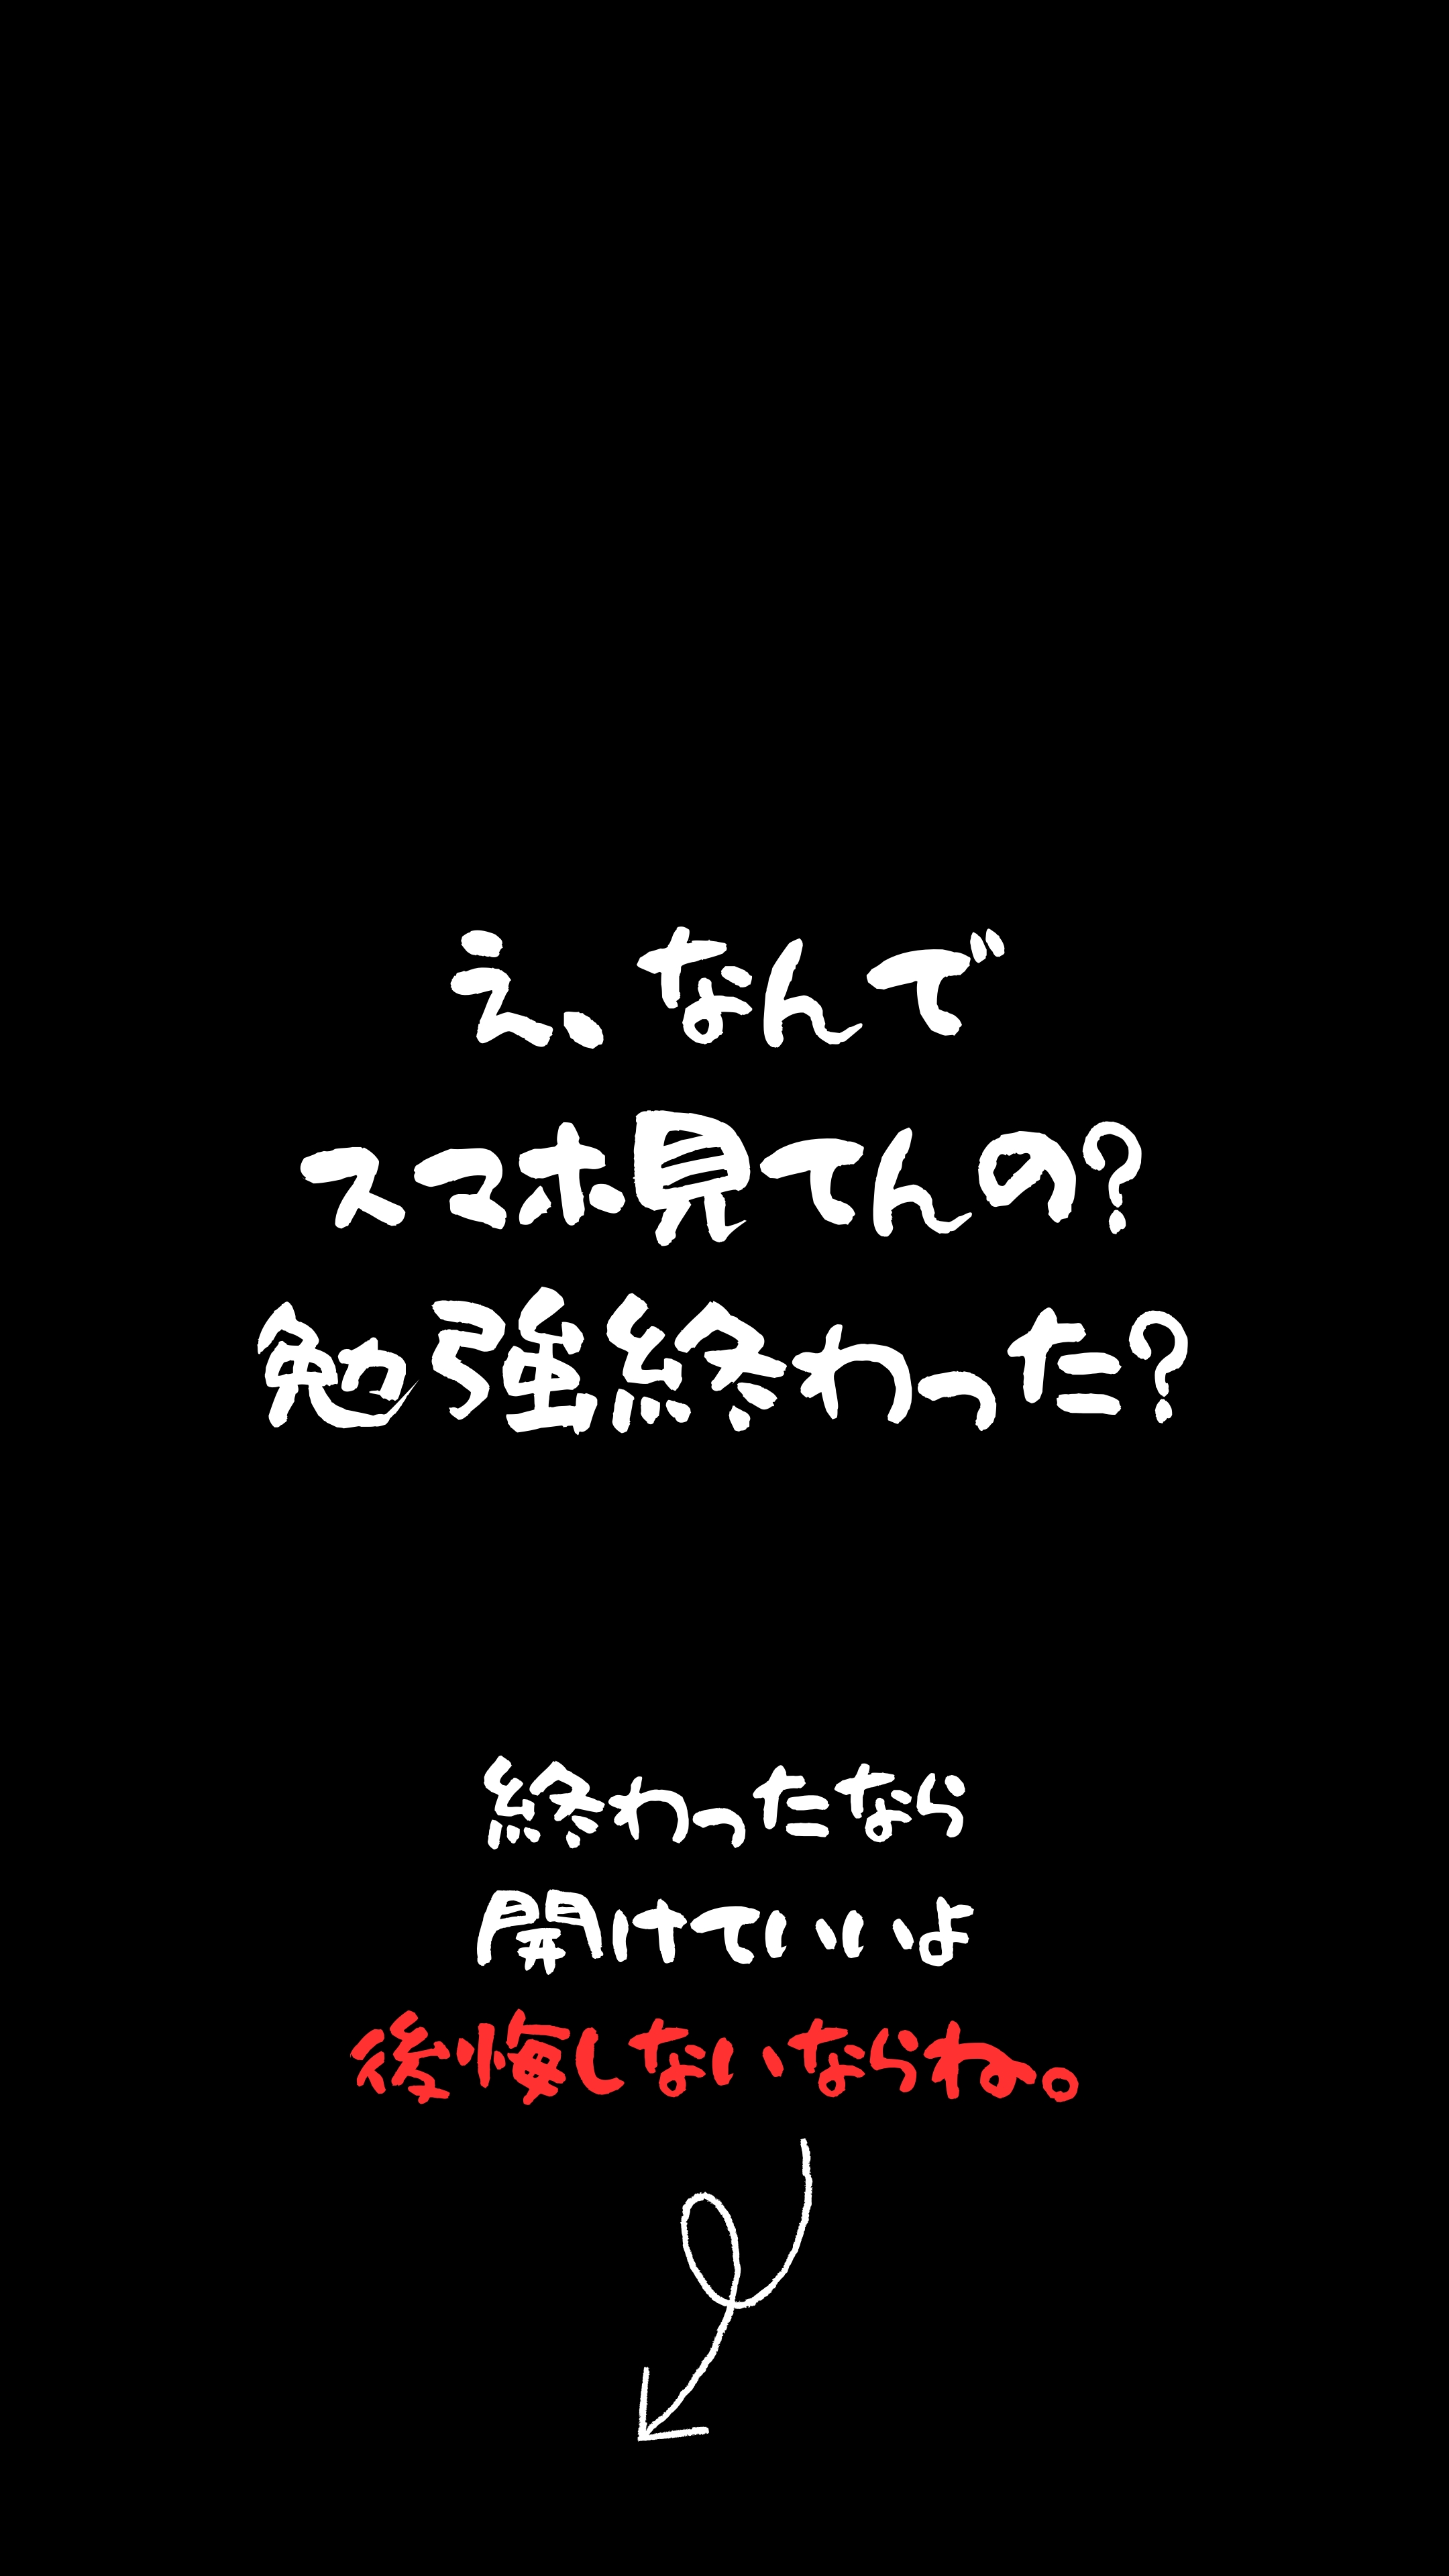 Mysterious Handwritten Japanese Question on Black Tapeta[5ae7481a6d774cc0a166]